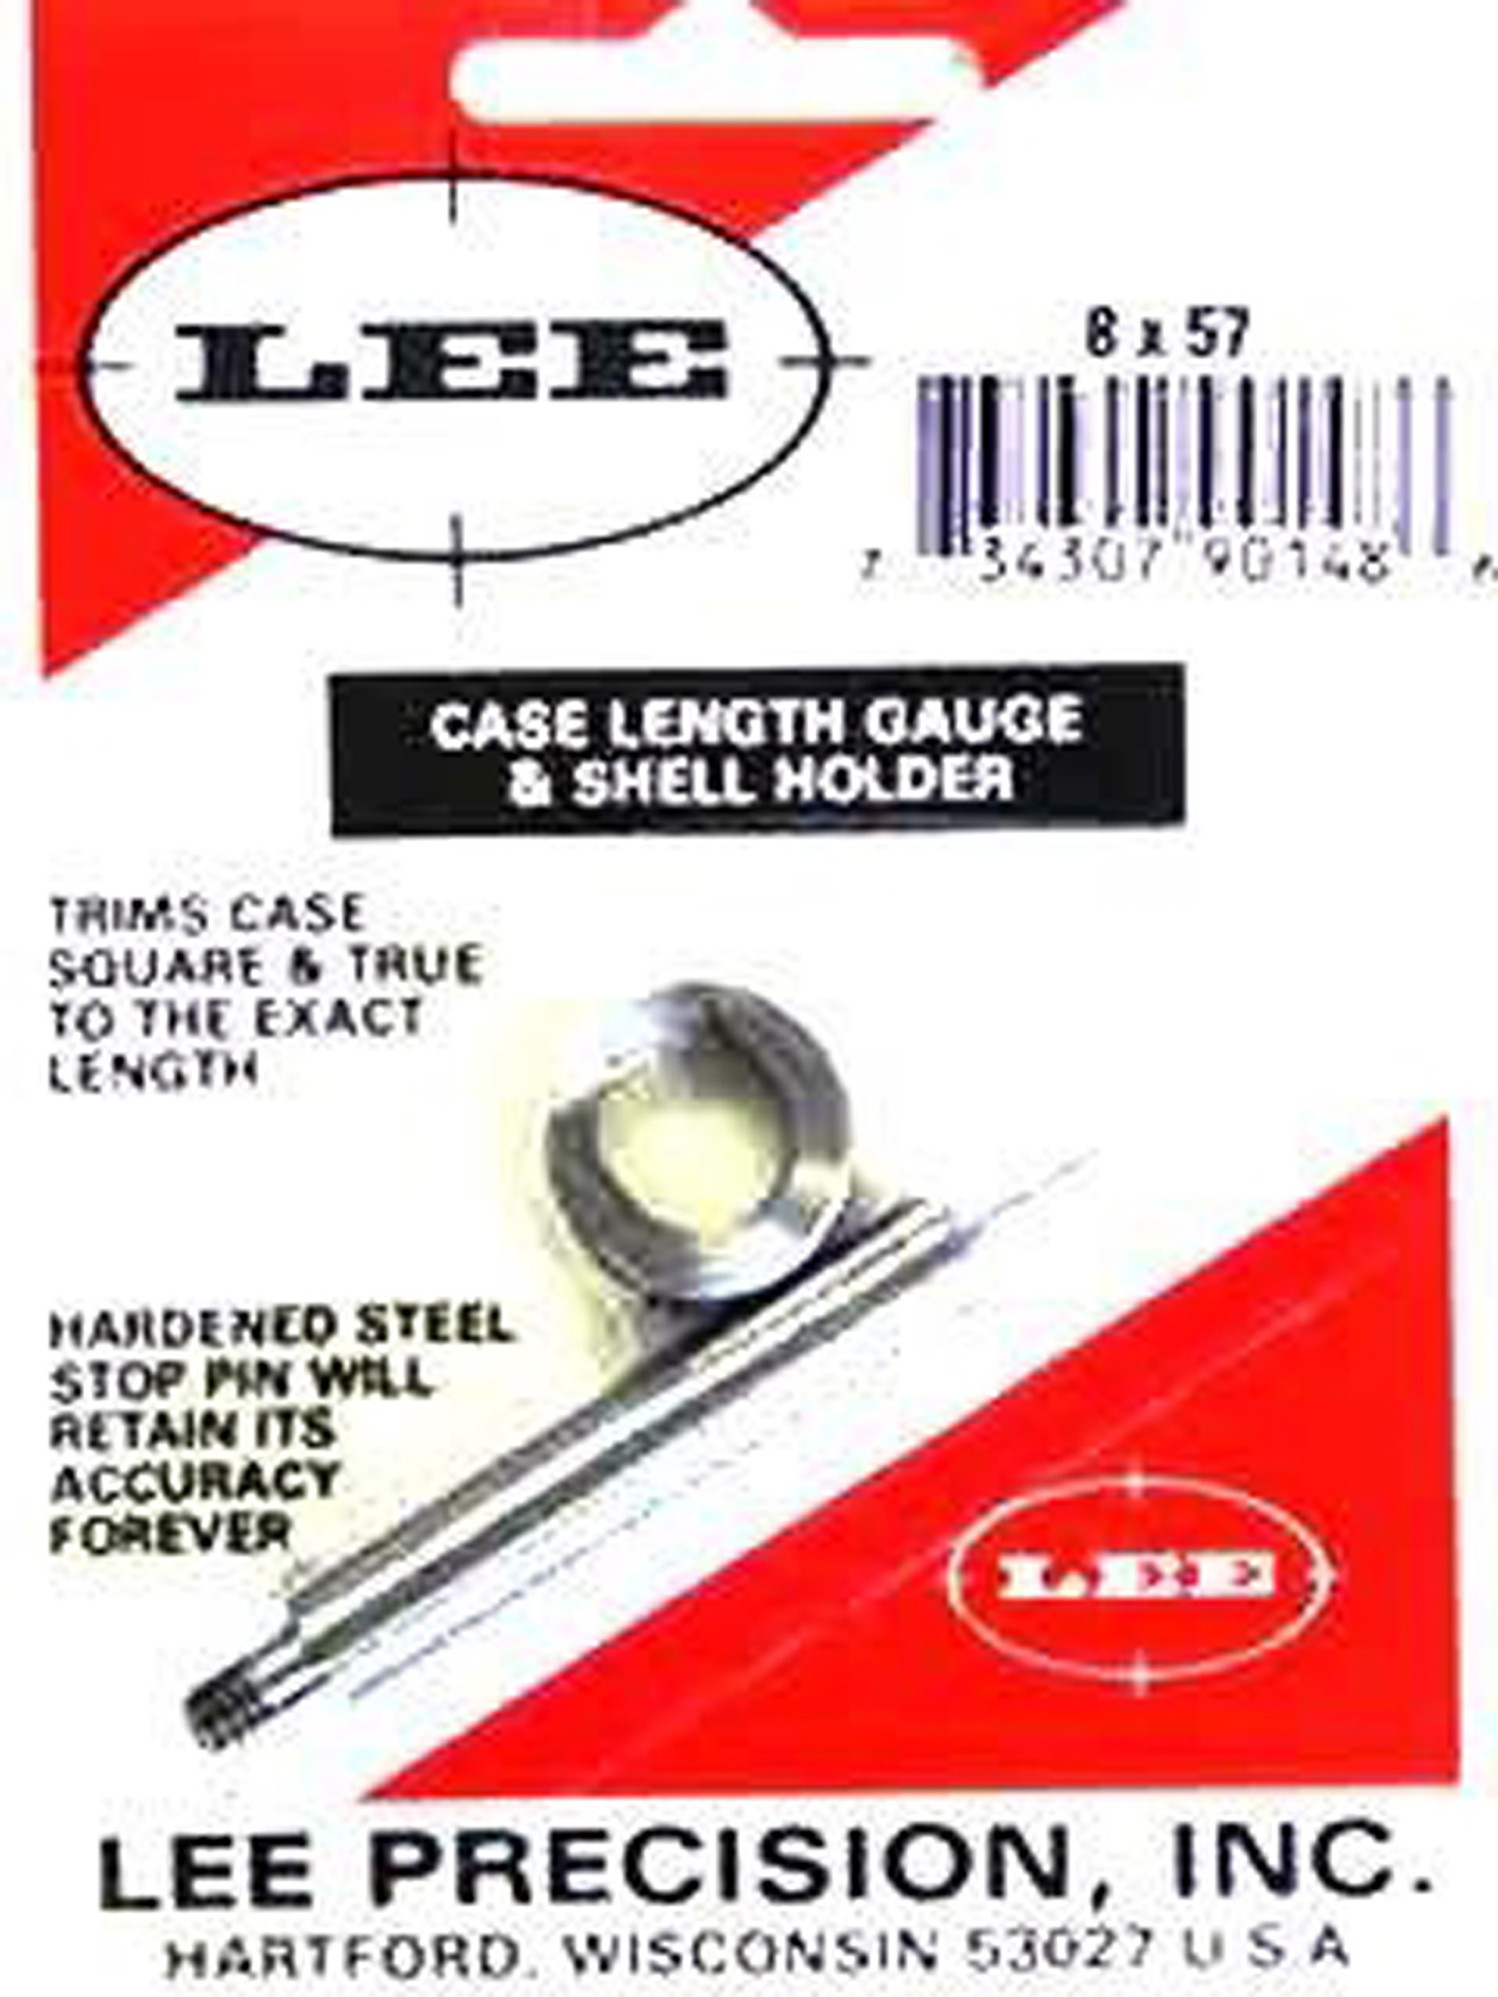 8X57 Mauser Case Gauge & Shell Holder